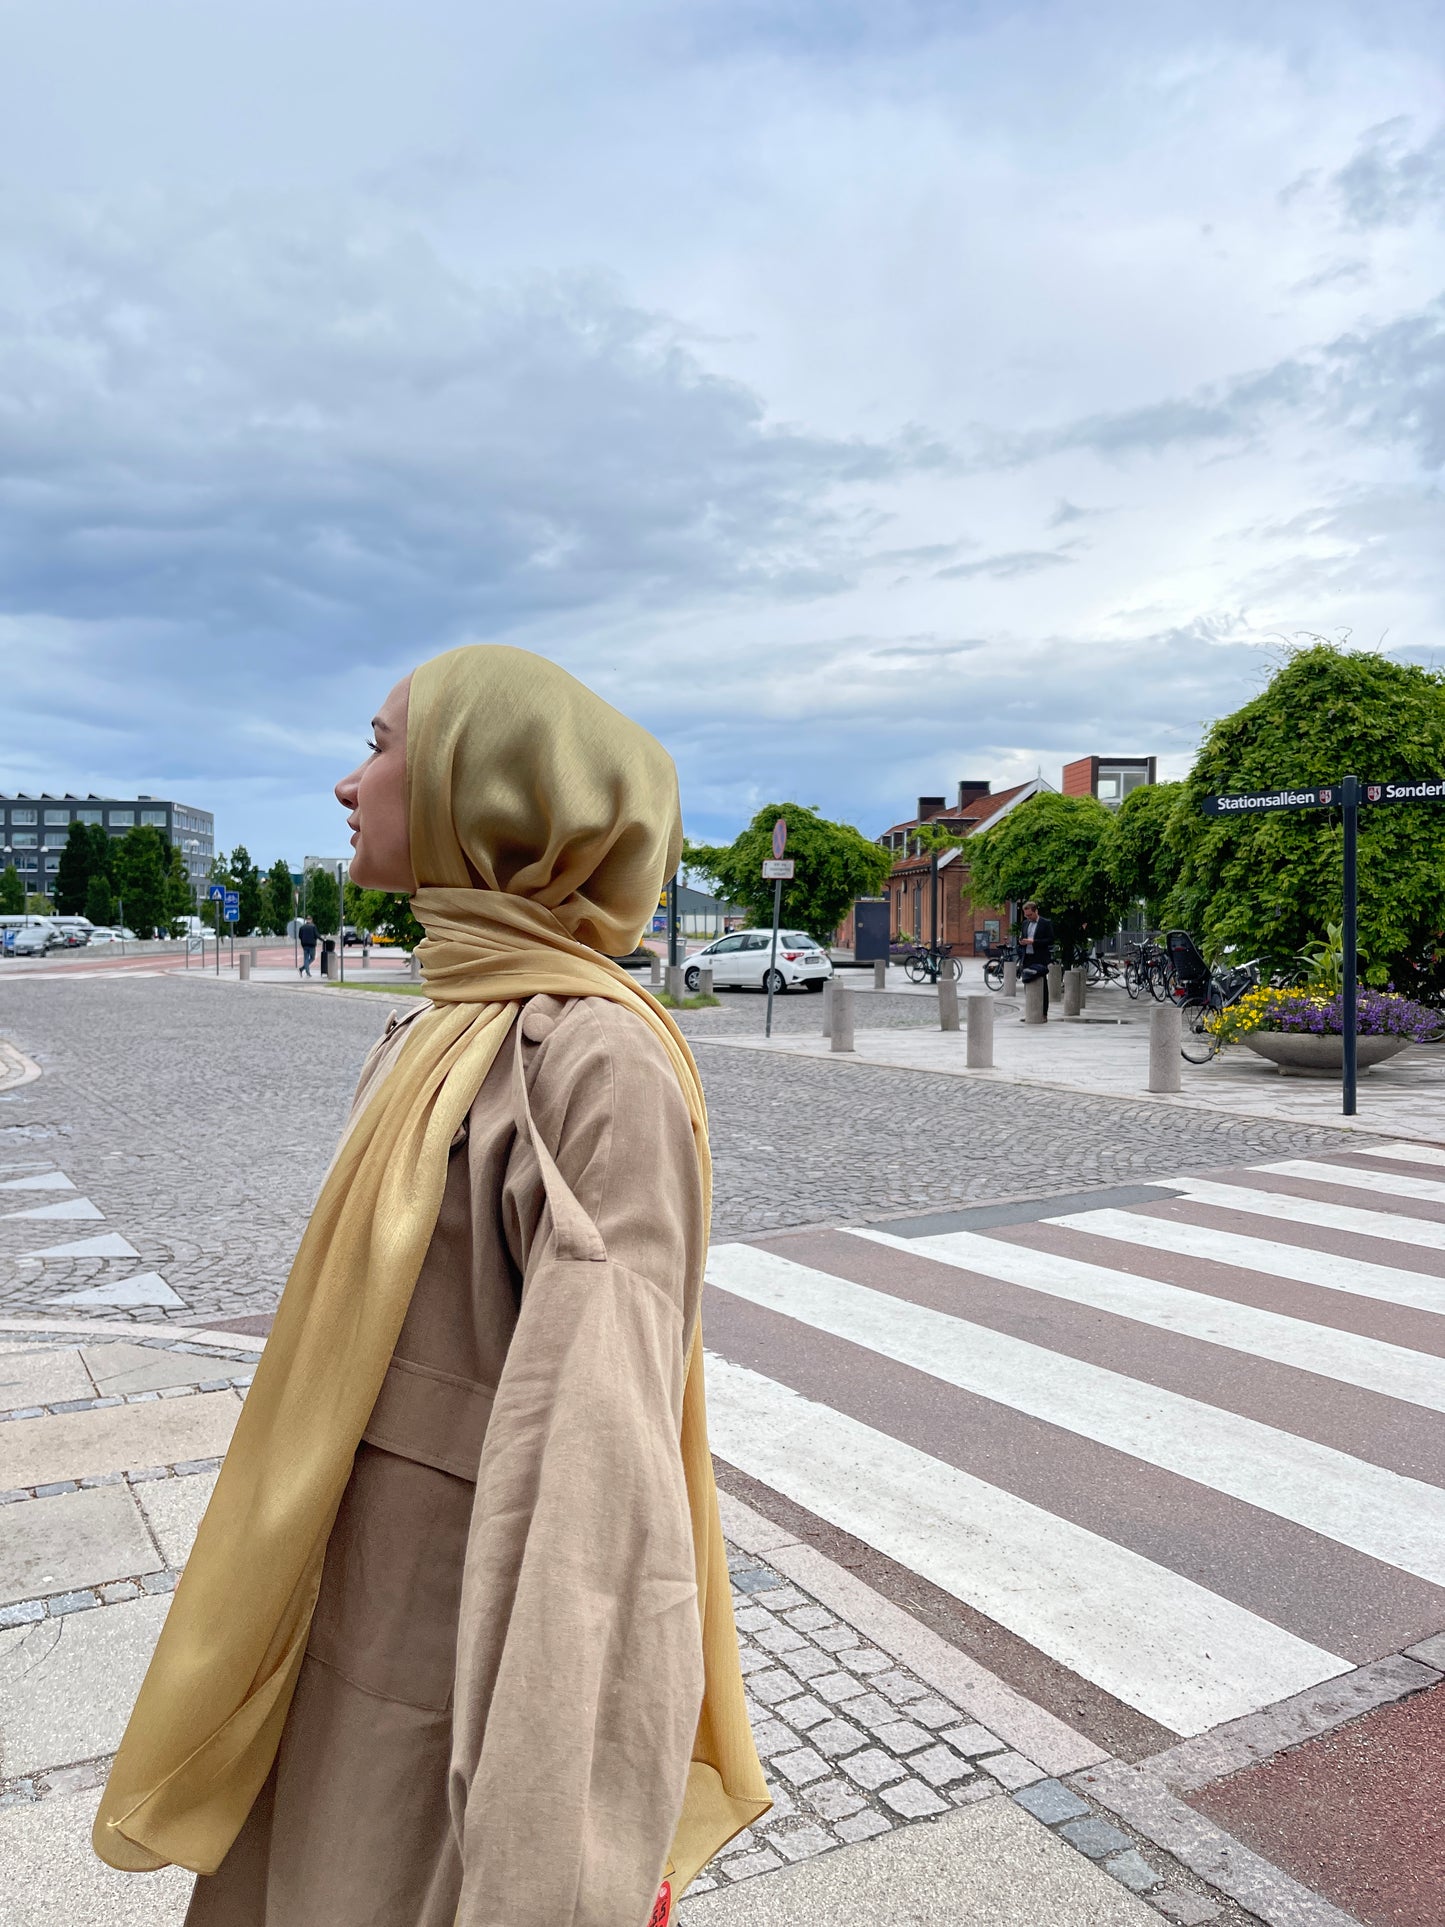 Shiny Silk Hijab - ss69